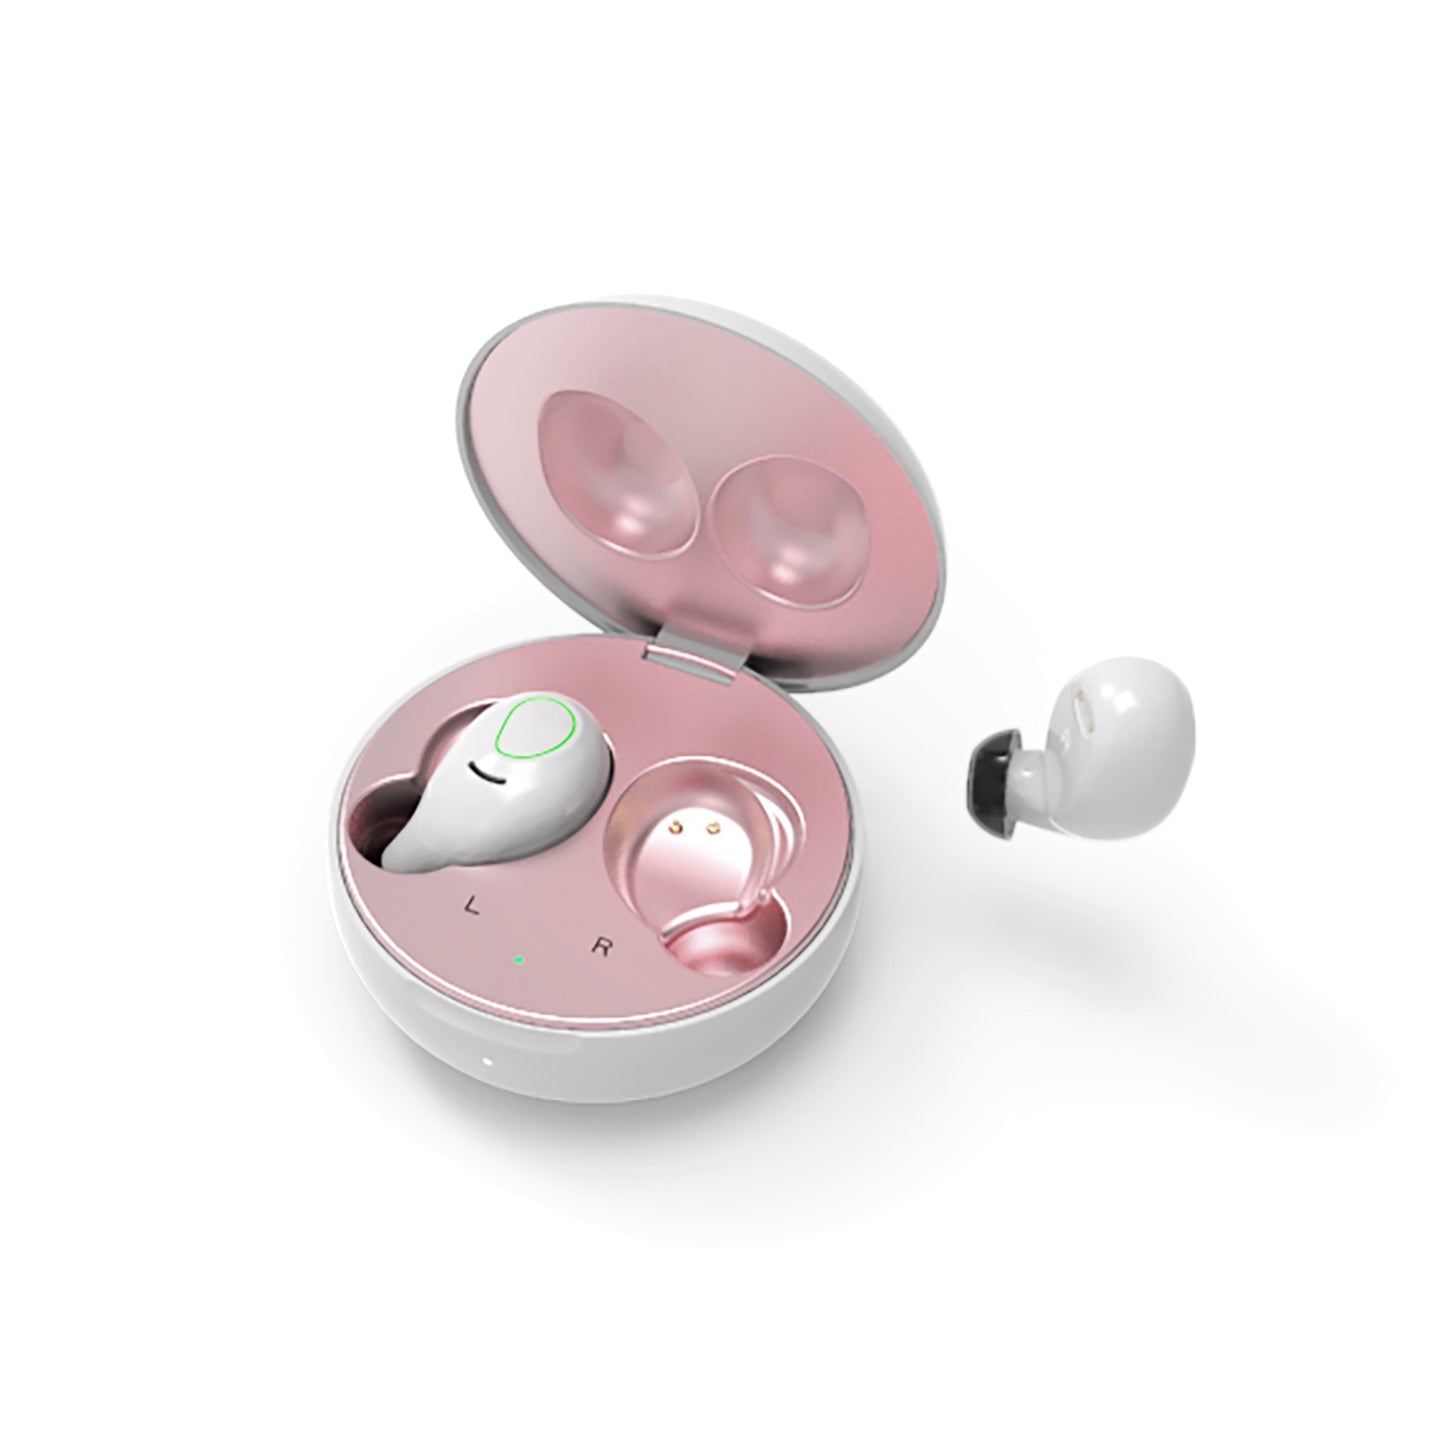 AIR ZEN 2.0 Pearl White and Rose Gold Earbuds (In Ear Wireless Headphones) - Grade A - Friendie Audio Pty Ltd